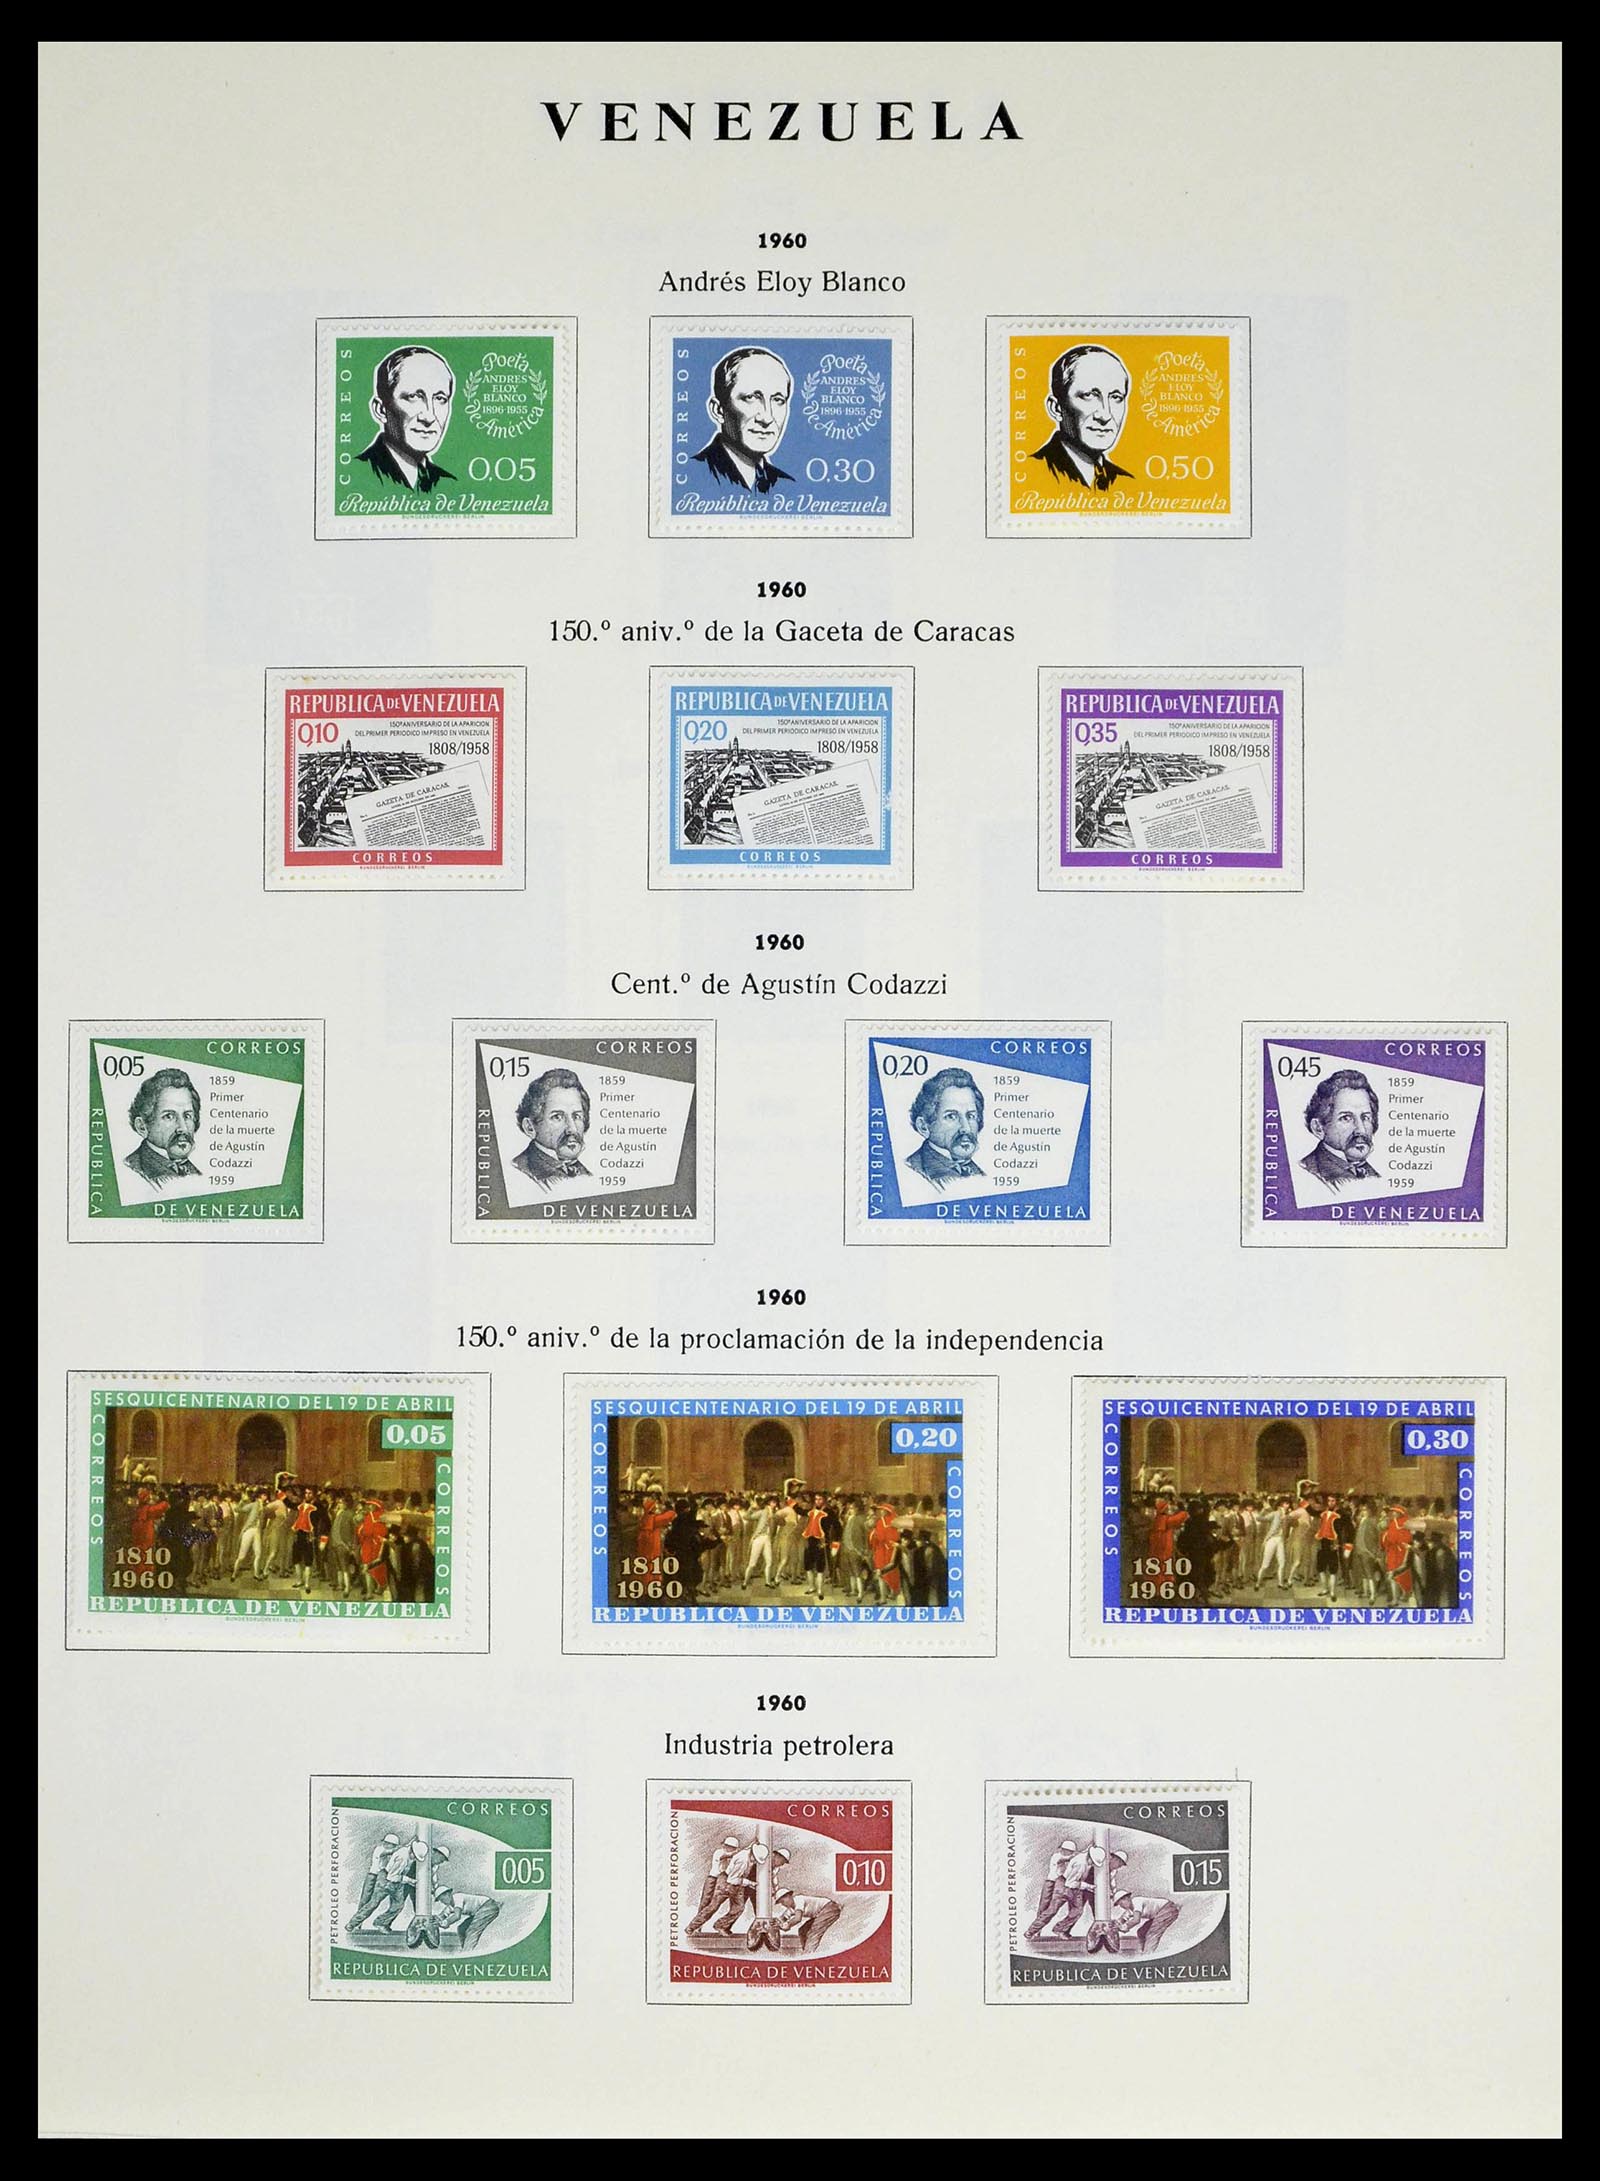 39223 0043 - Stamp collection 39223 Venezuela 1859-1984.